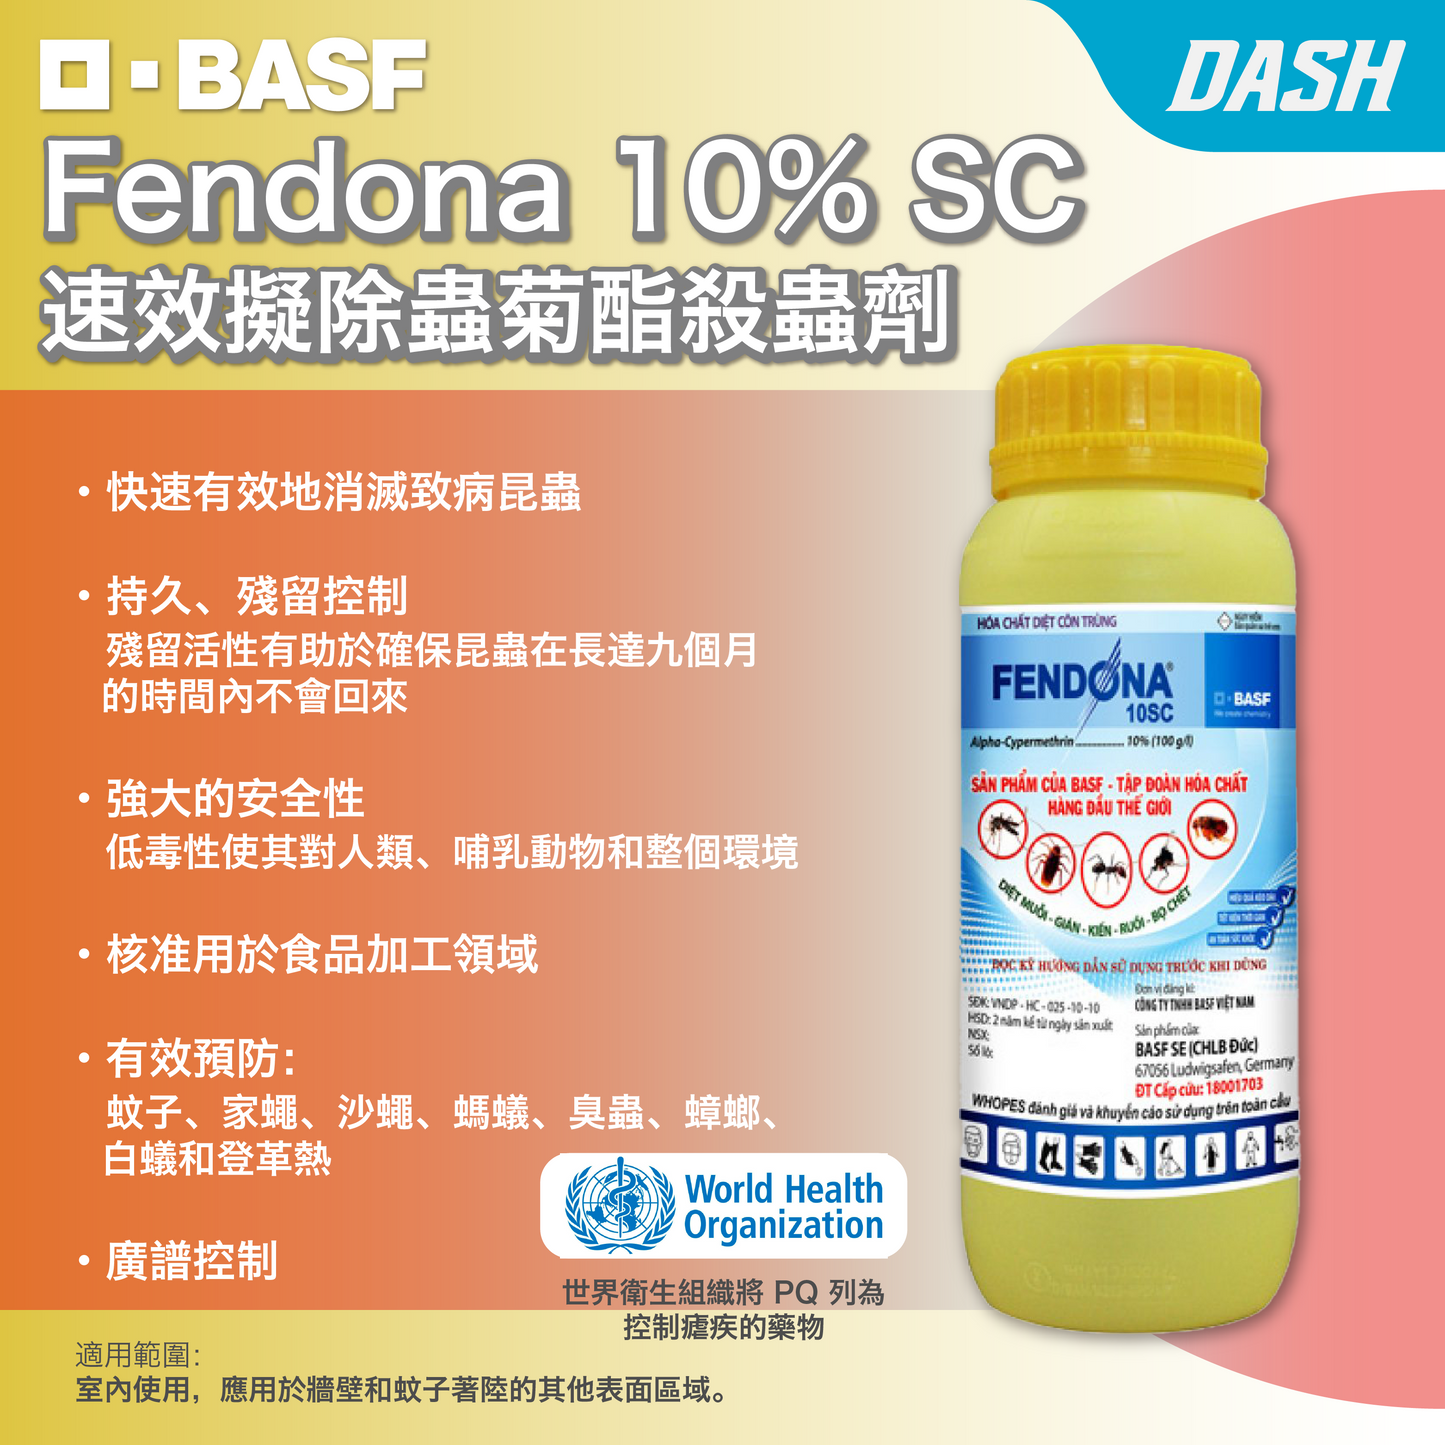 DASH｜Fendona 10% SC 速效擬除蟲菊酯殺蟲劑